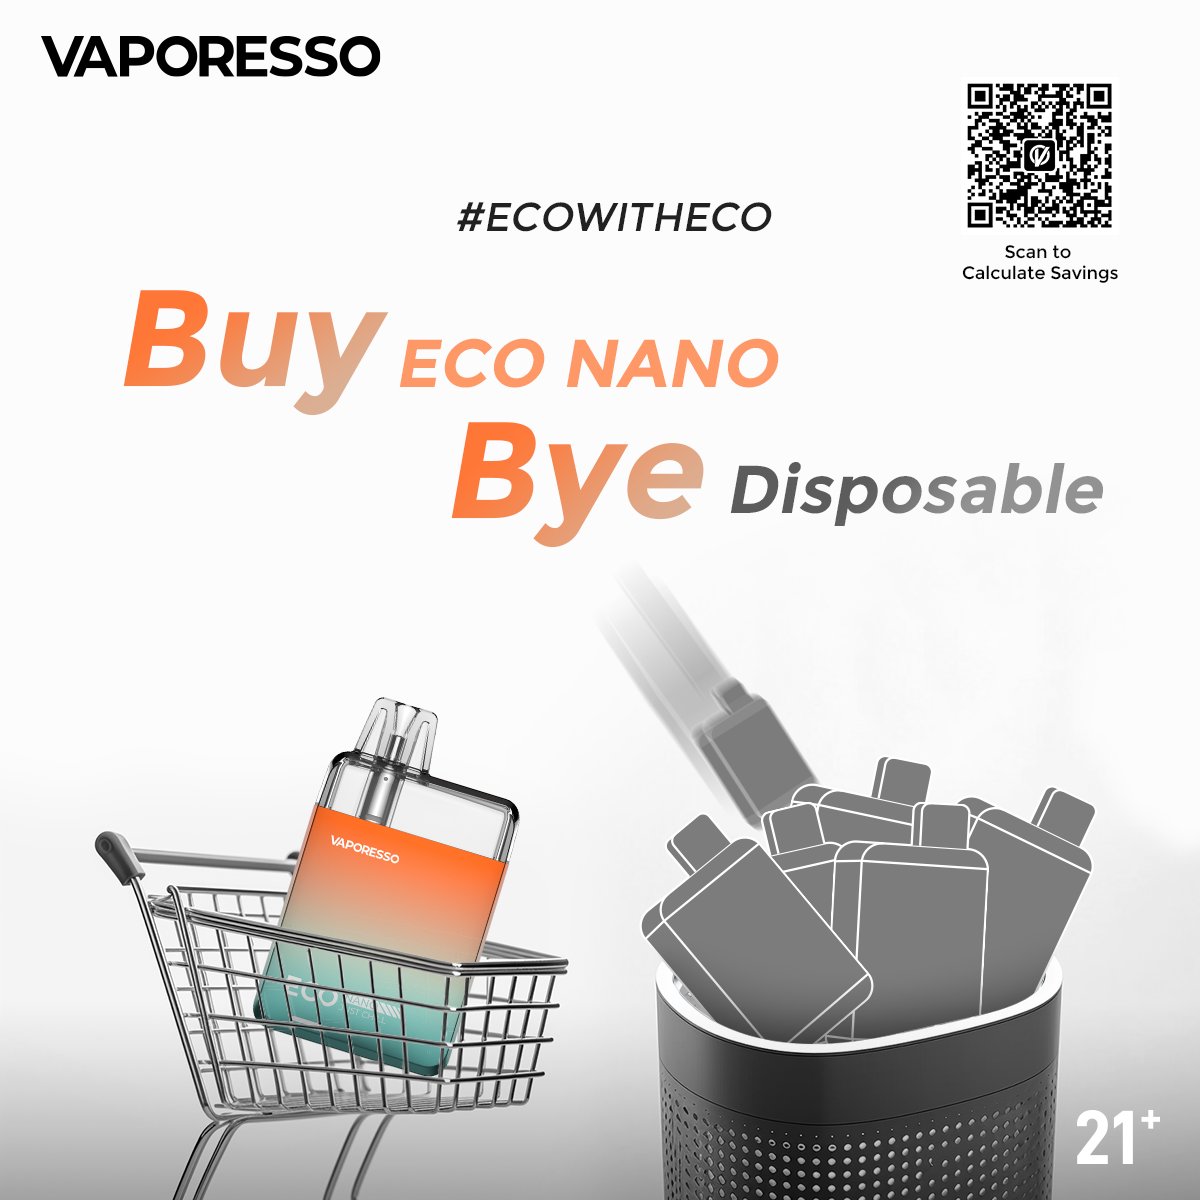 🌿 Ready for a Vaping Upgrade? Say Goodbye to Disposables! 🚮
Make the change: Go Eco Nano! 💚🛒

#EcoFriendlyVaping #ChooseEcoNano #SustainableSwitch #VapeResponsibly
#vape #vapefam #vapeon #vapelife #vaporesso #econano #vaporessoeconano #fashion #puffs #Vaping #VapLife  #uae